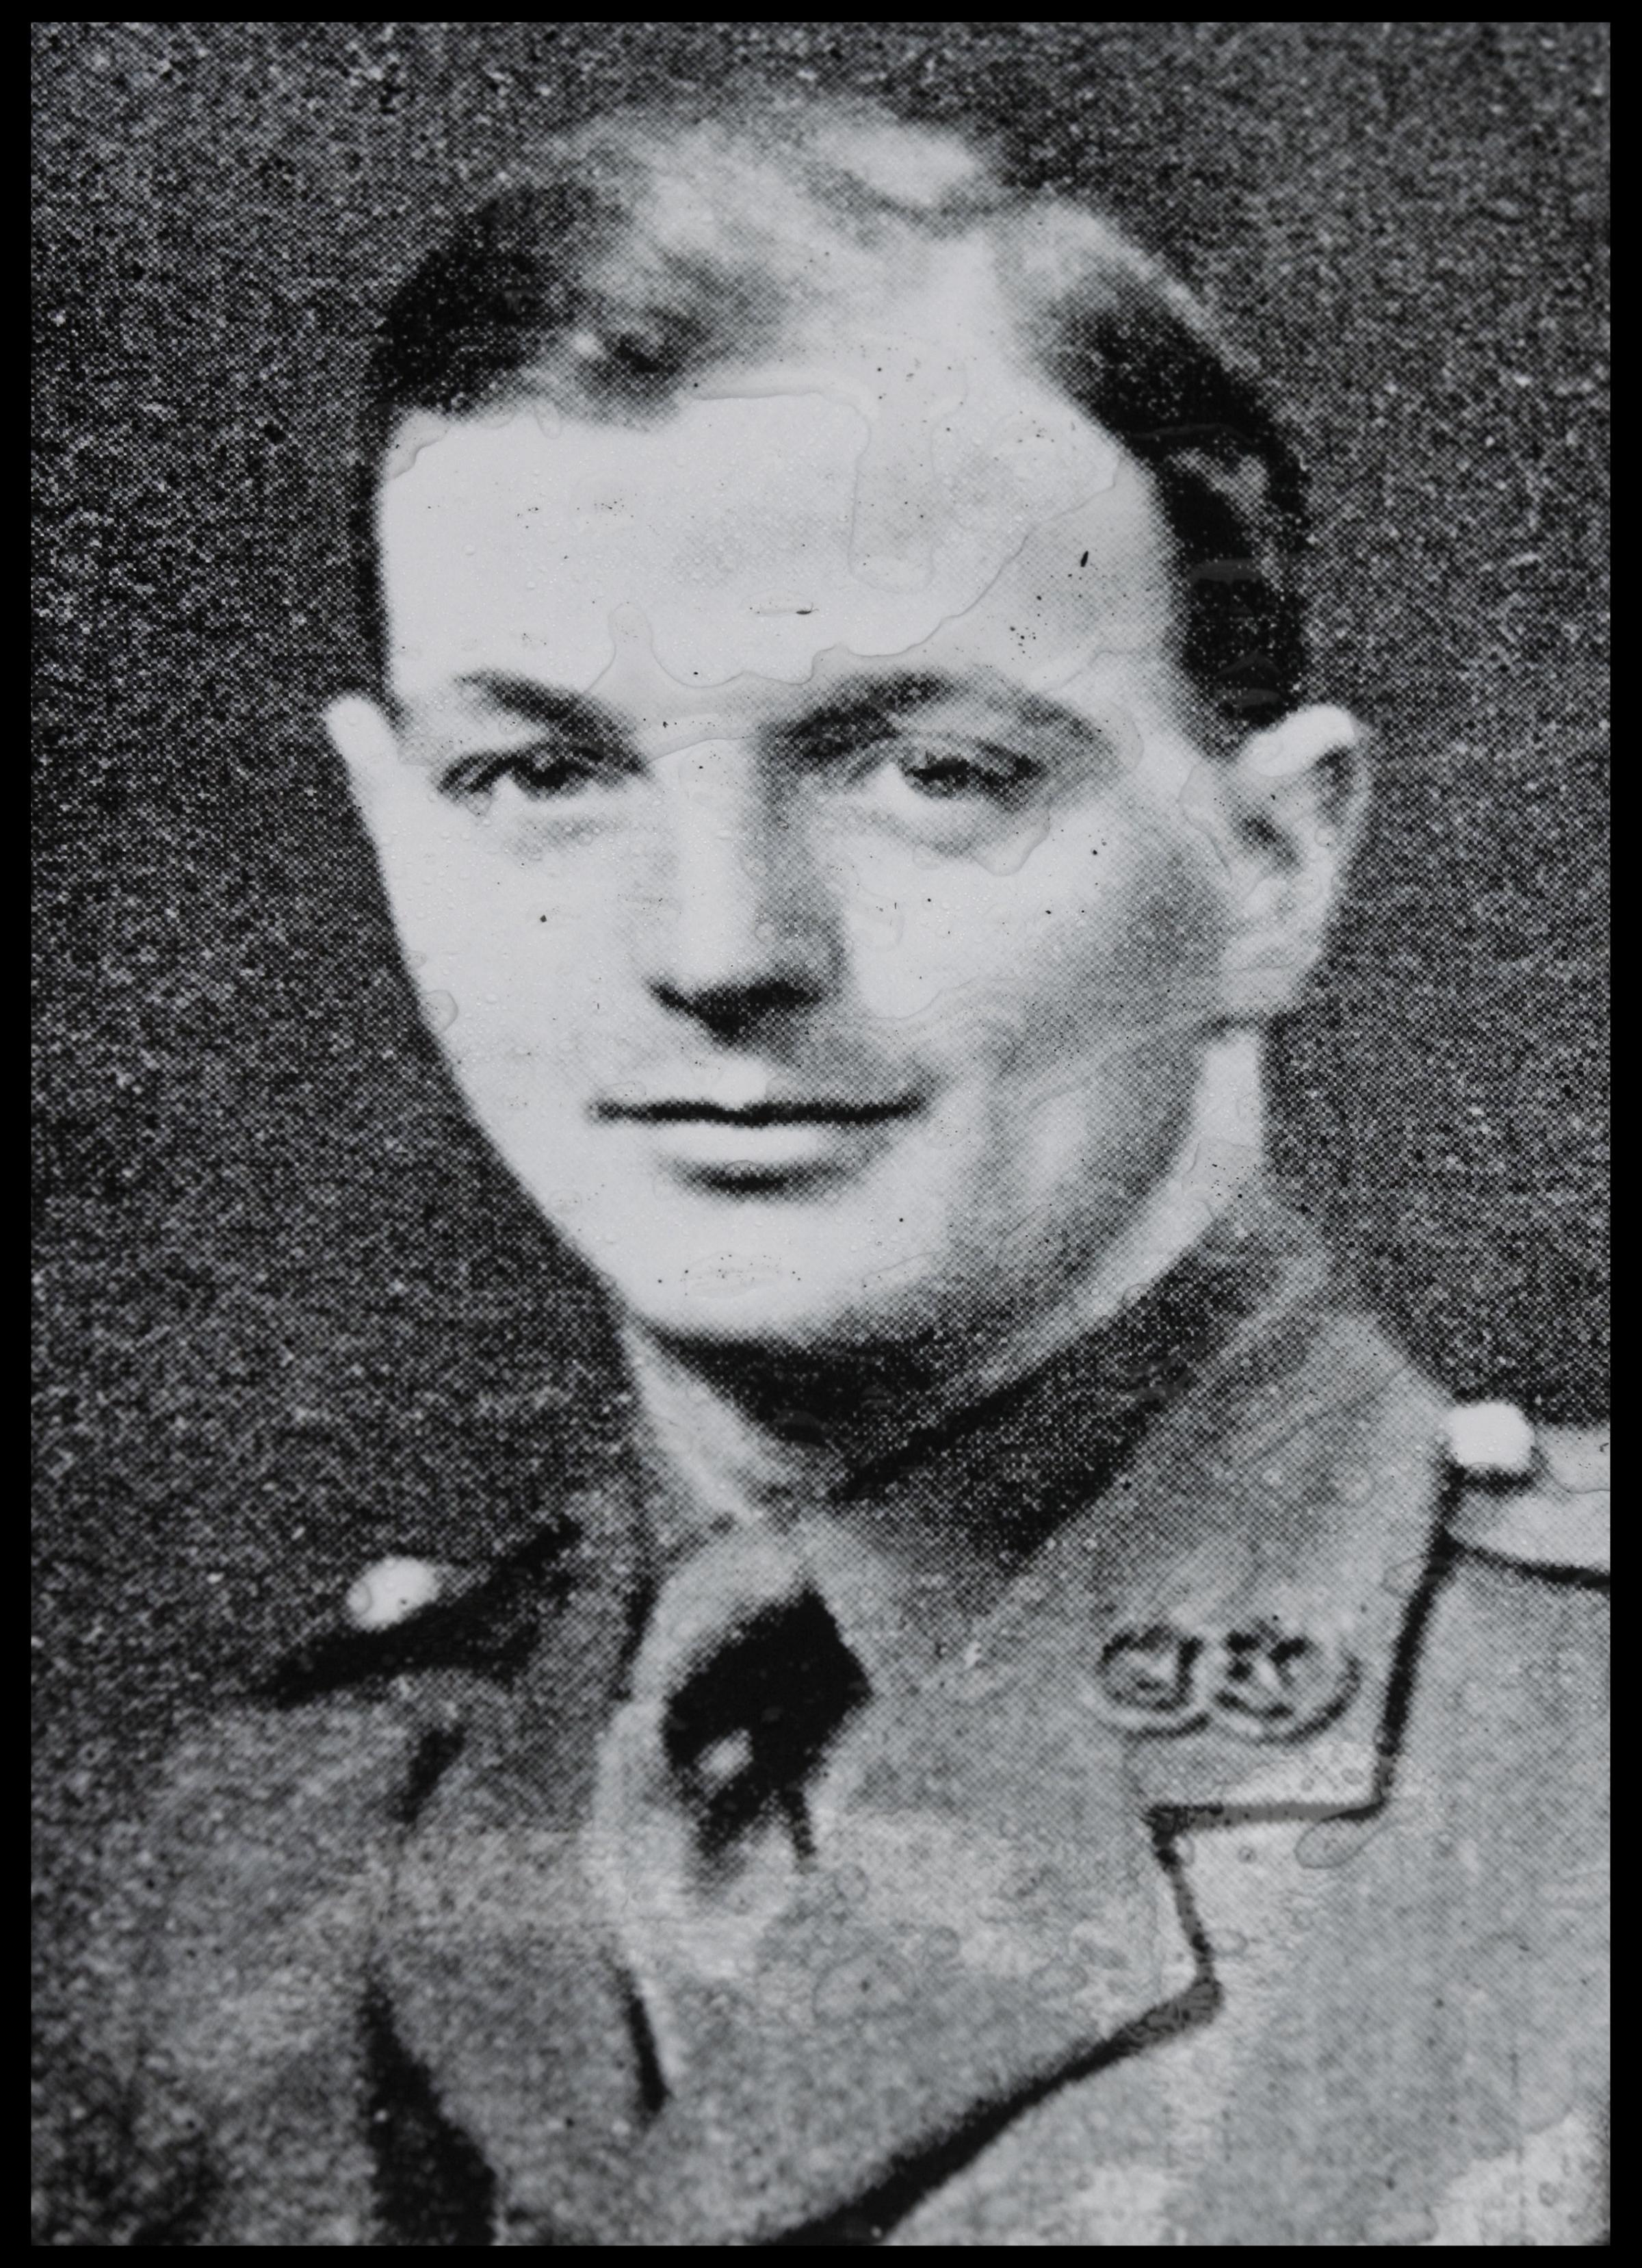 Lt John Young